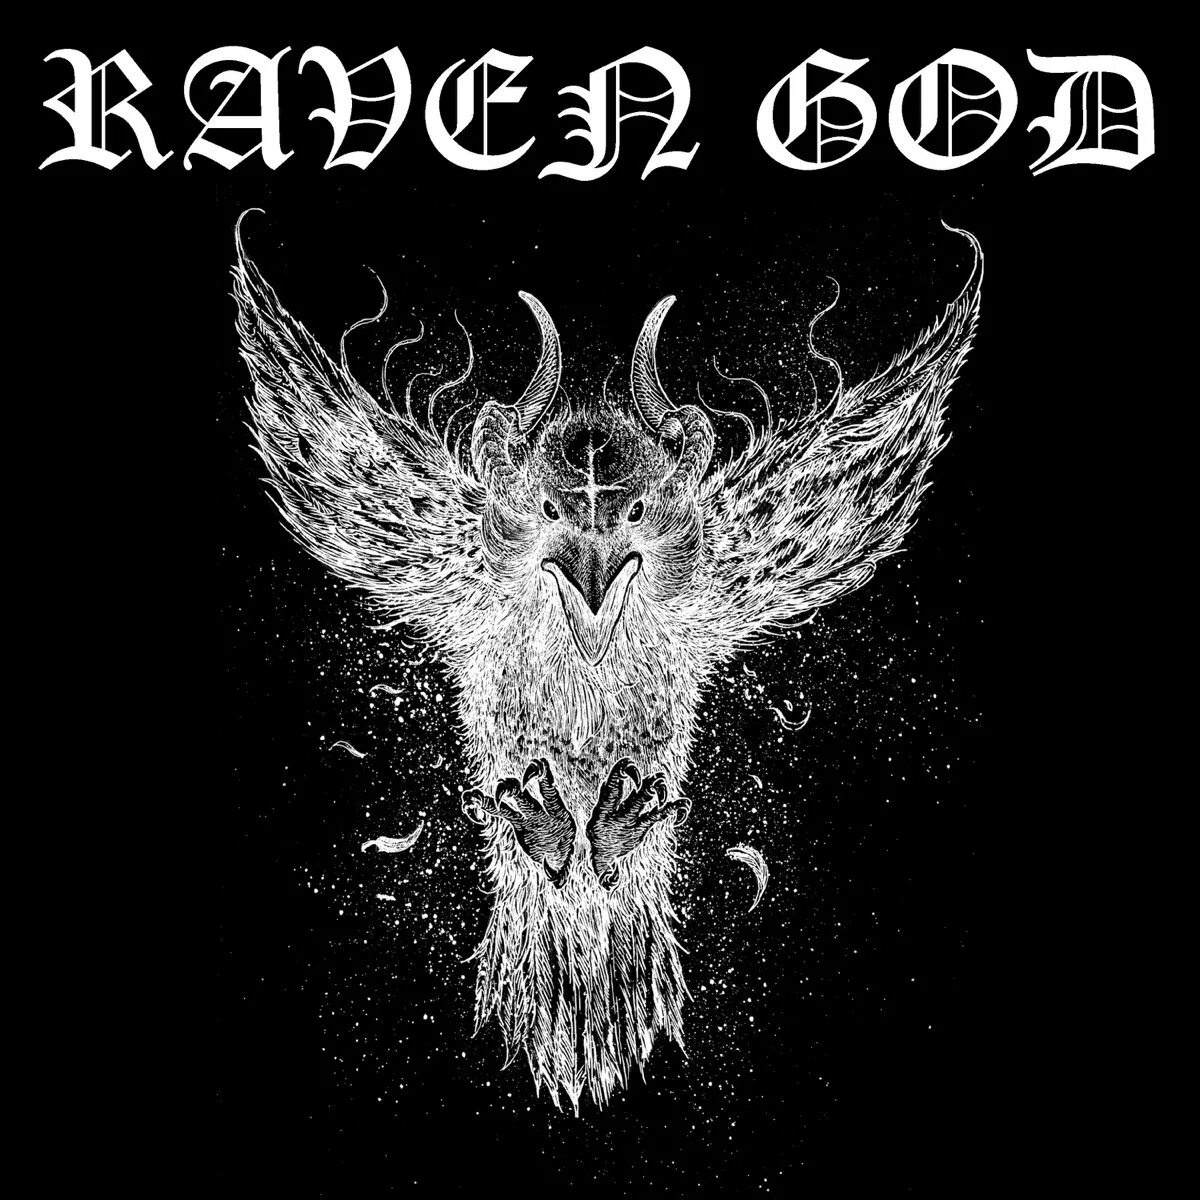 Raven God. Raven - 2020 - Metal City. Count Raven Band.